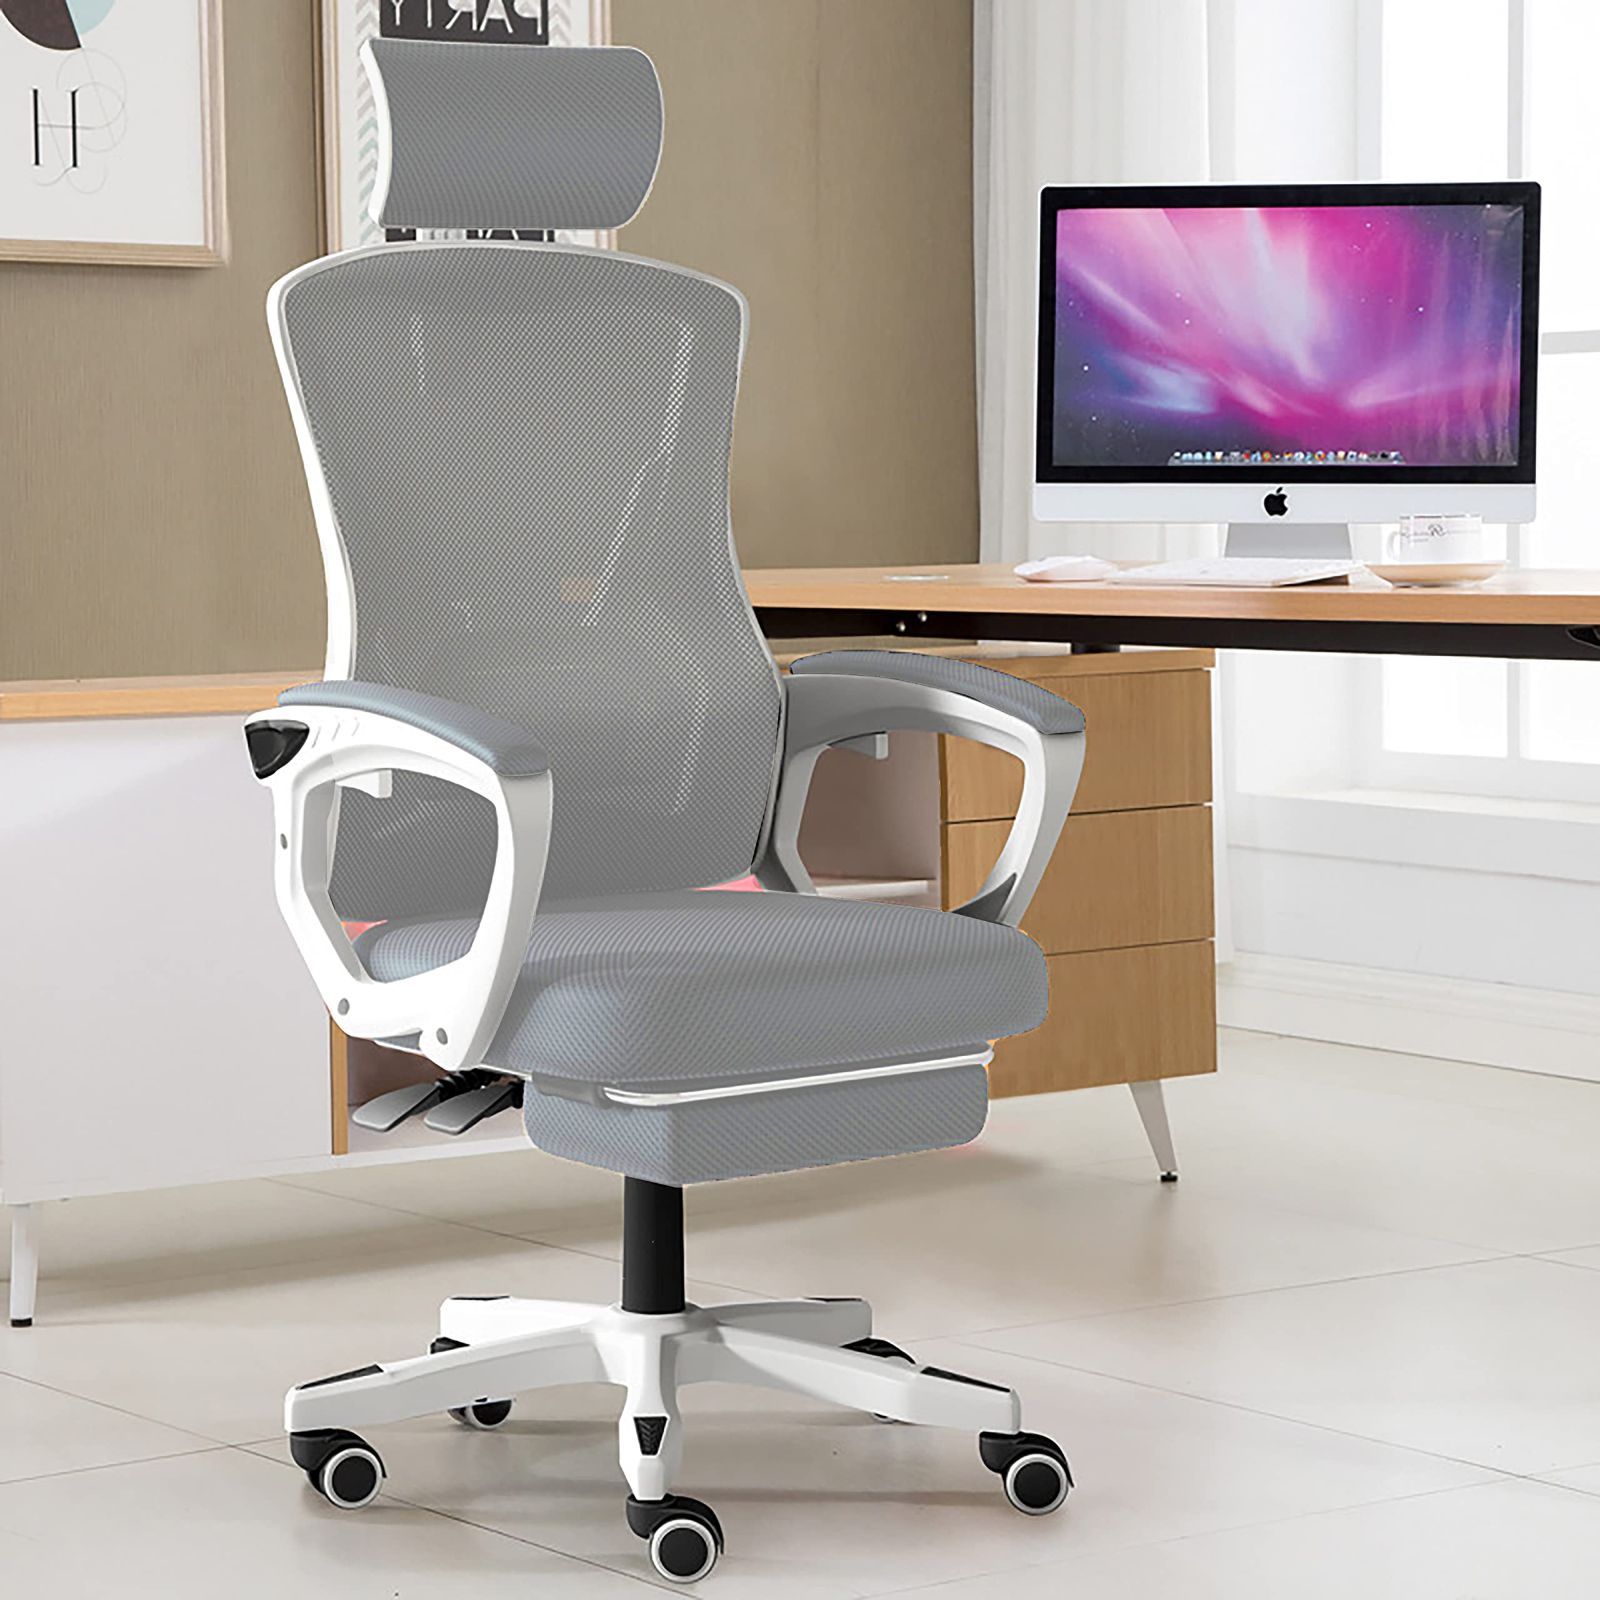 Ticova オフィスチェア 人間工学椅子 ハイバック事務椅子 メッシュ